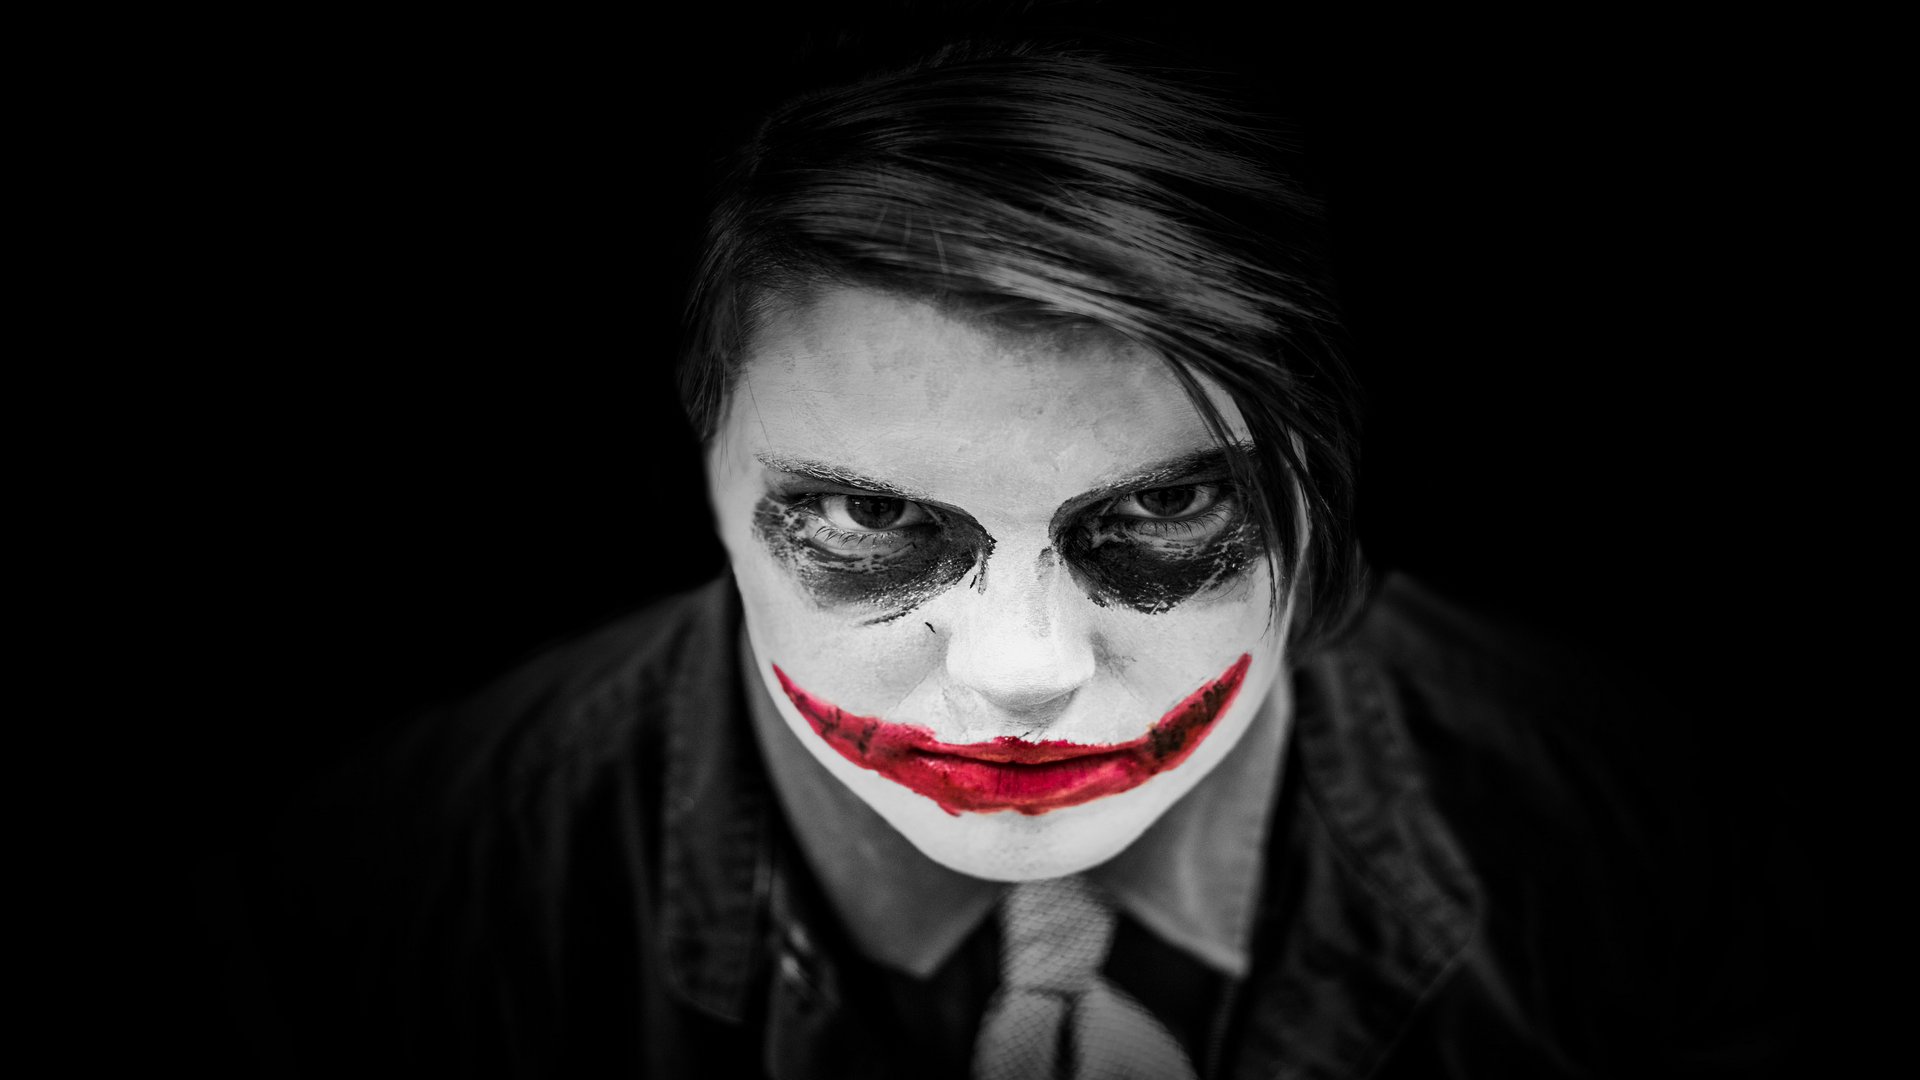 Review Film Sosok Joker - (Dari Sudut Pandang Psikologi)